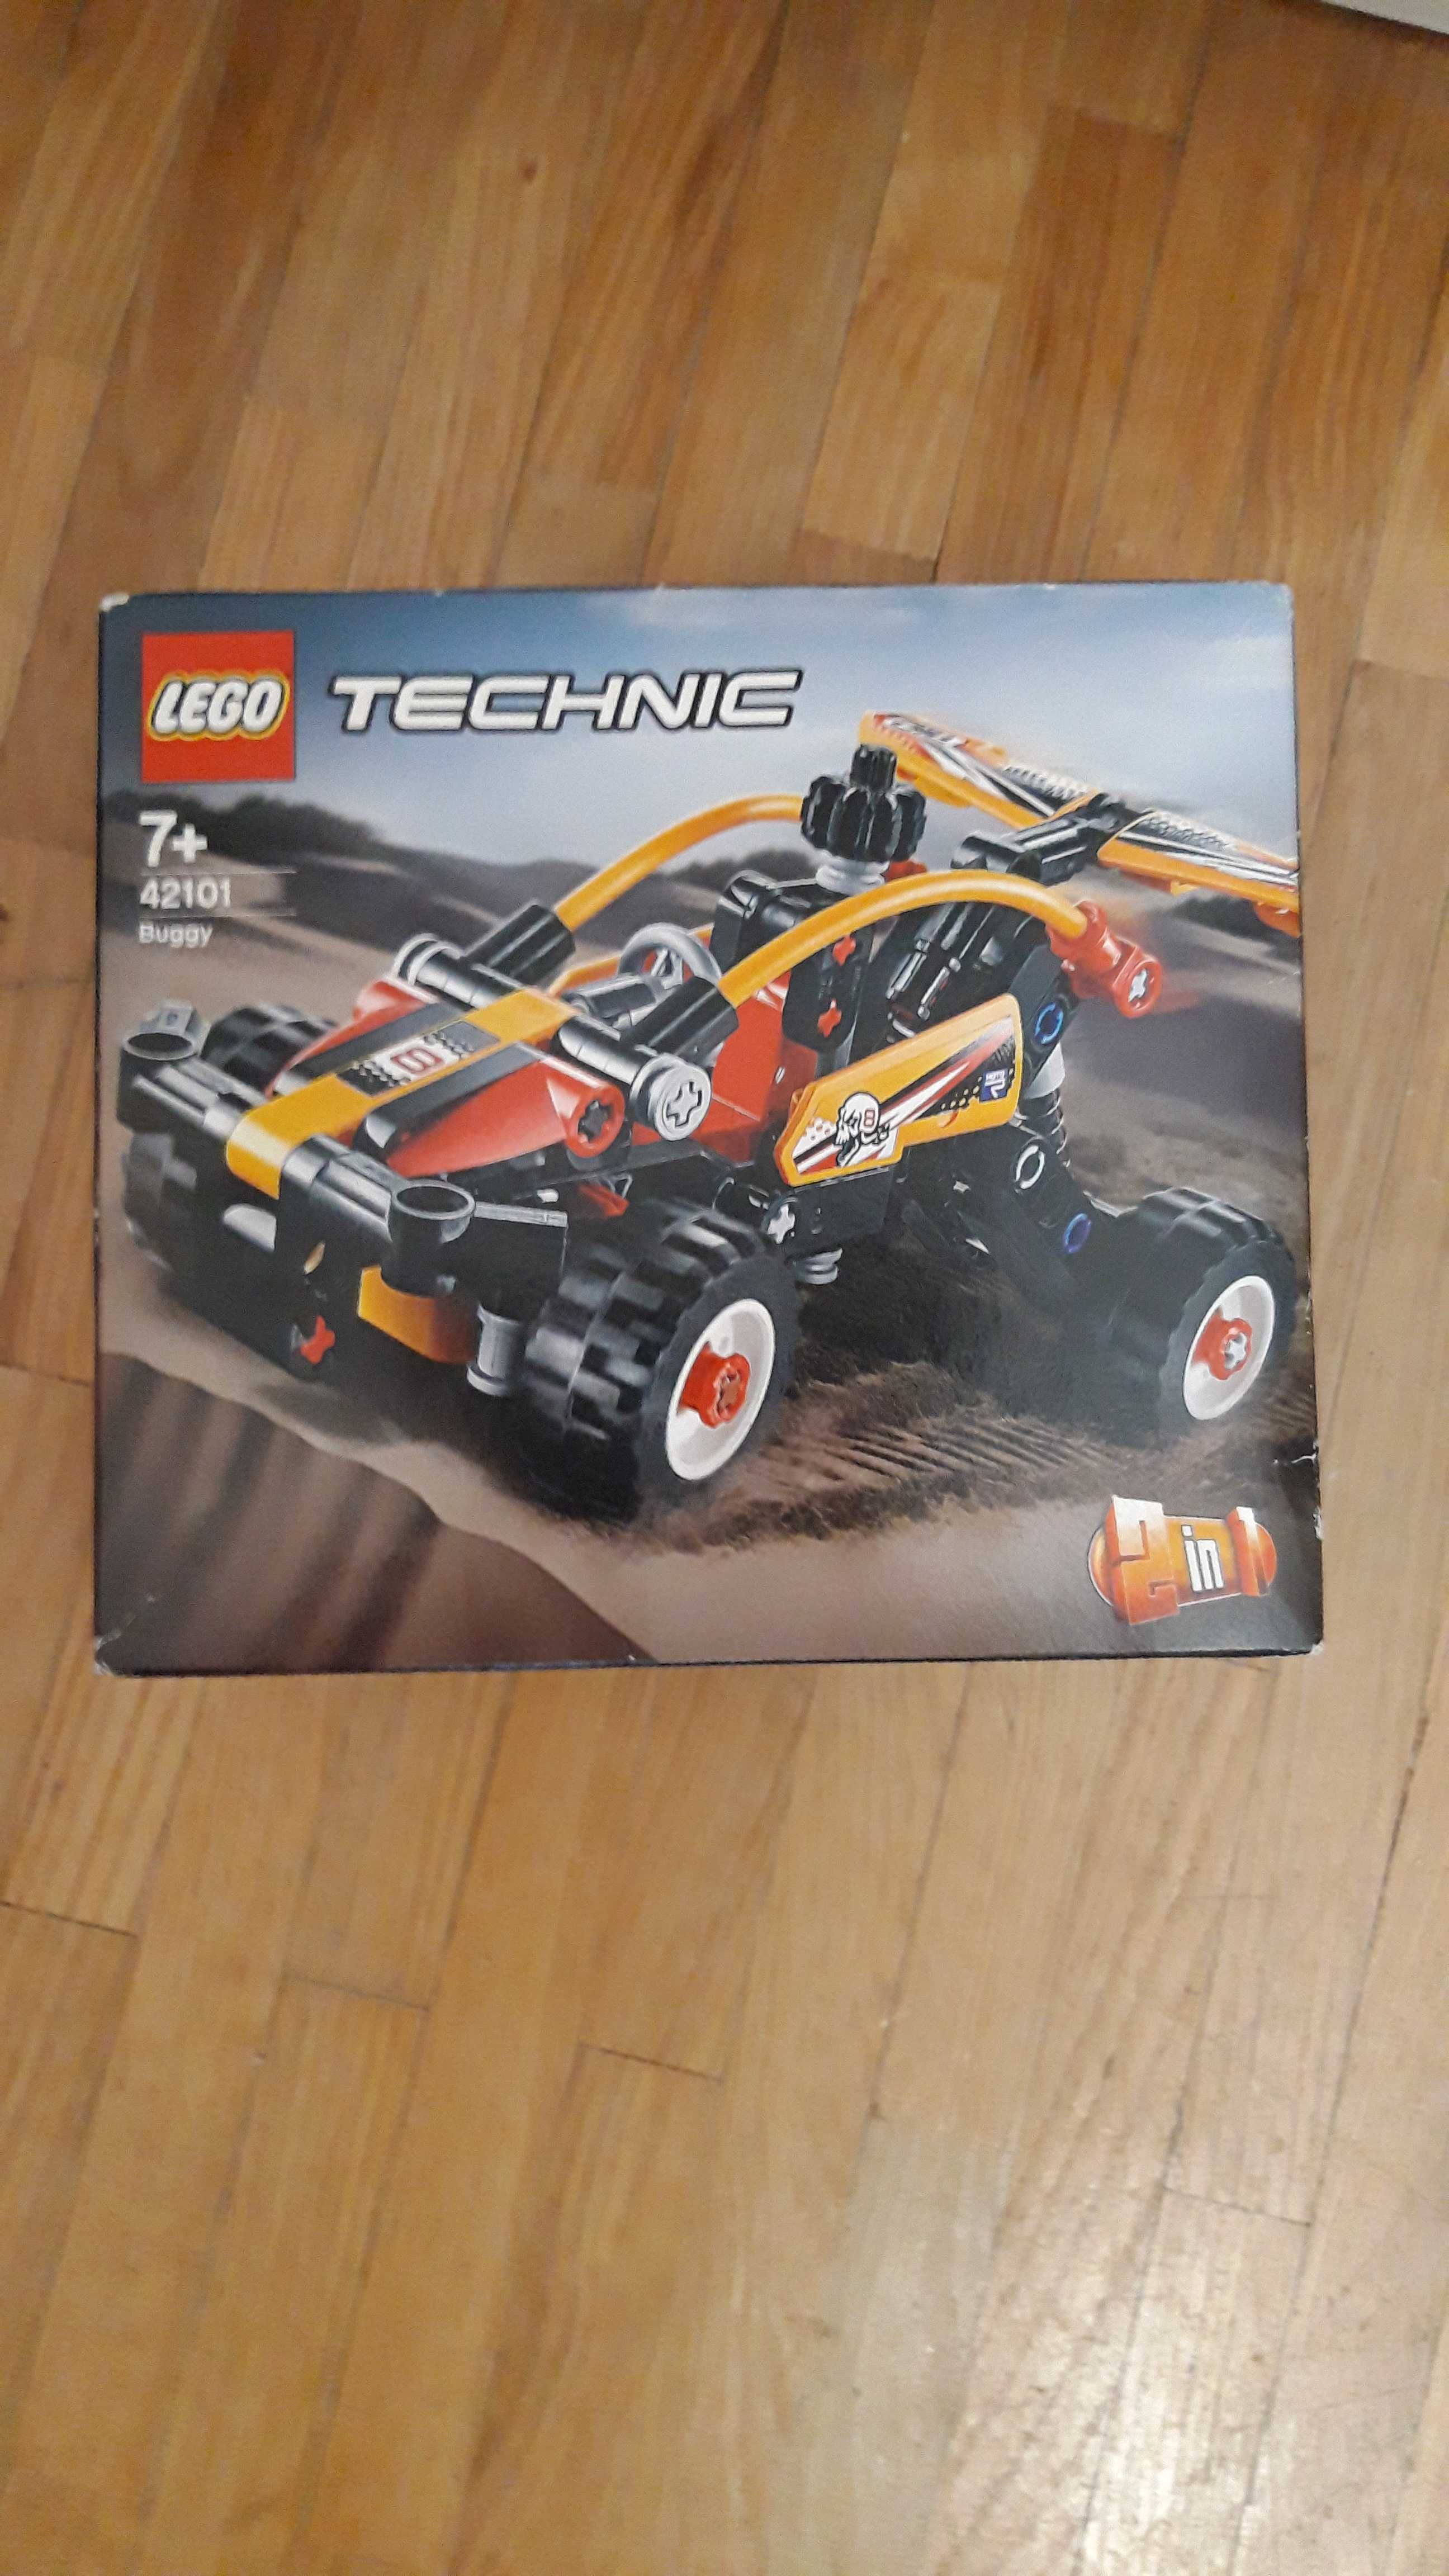 Nowy zestaw Lego Technic 42101